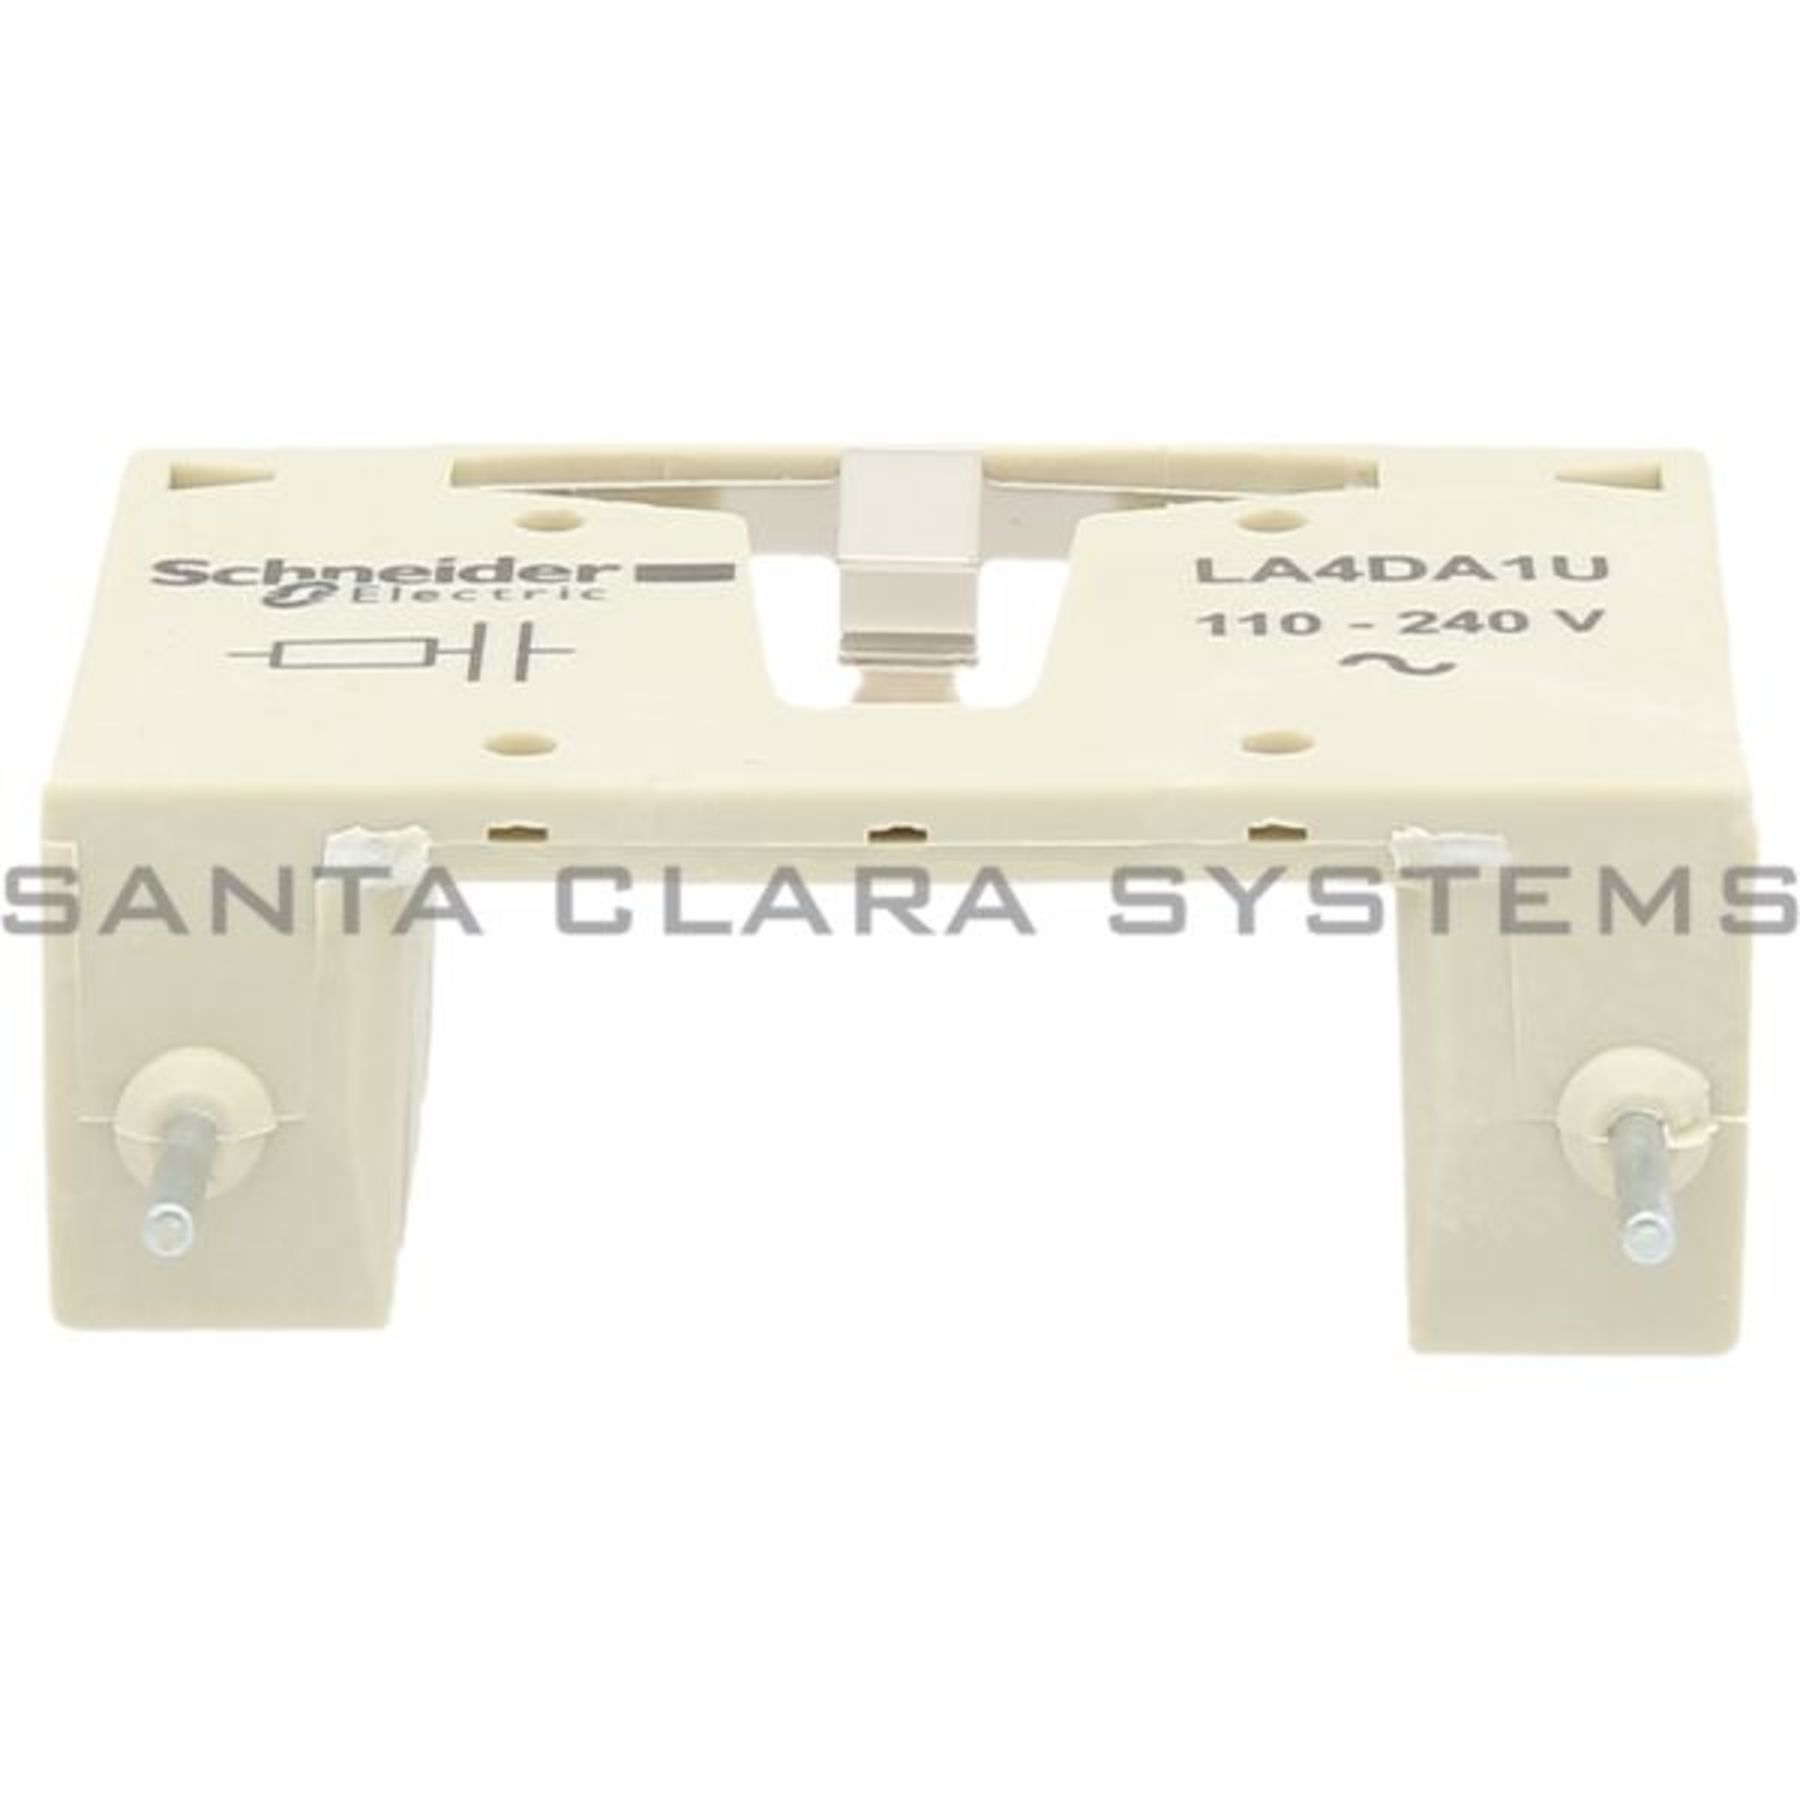 Telemecanique LA4DA1U Industrial Control System for sale online 